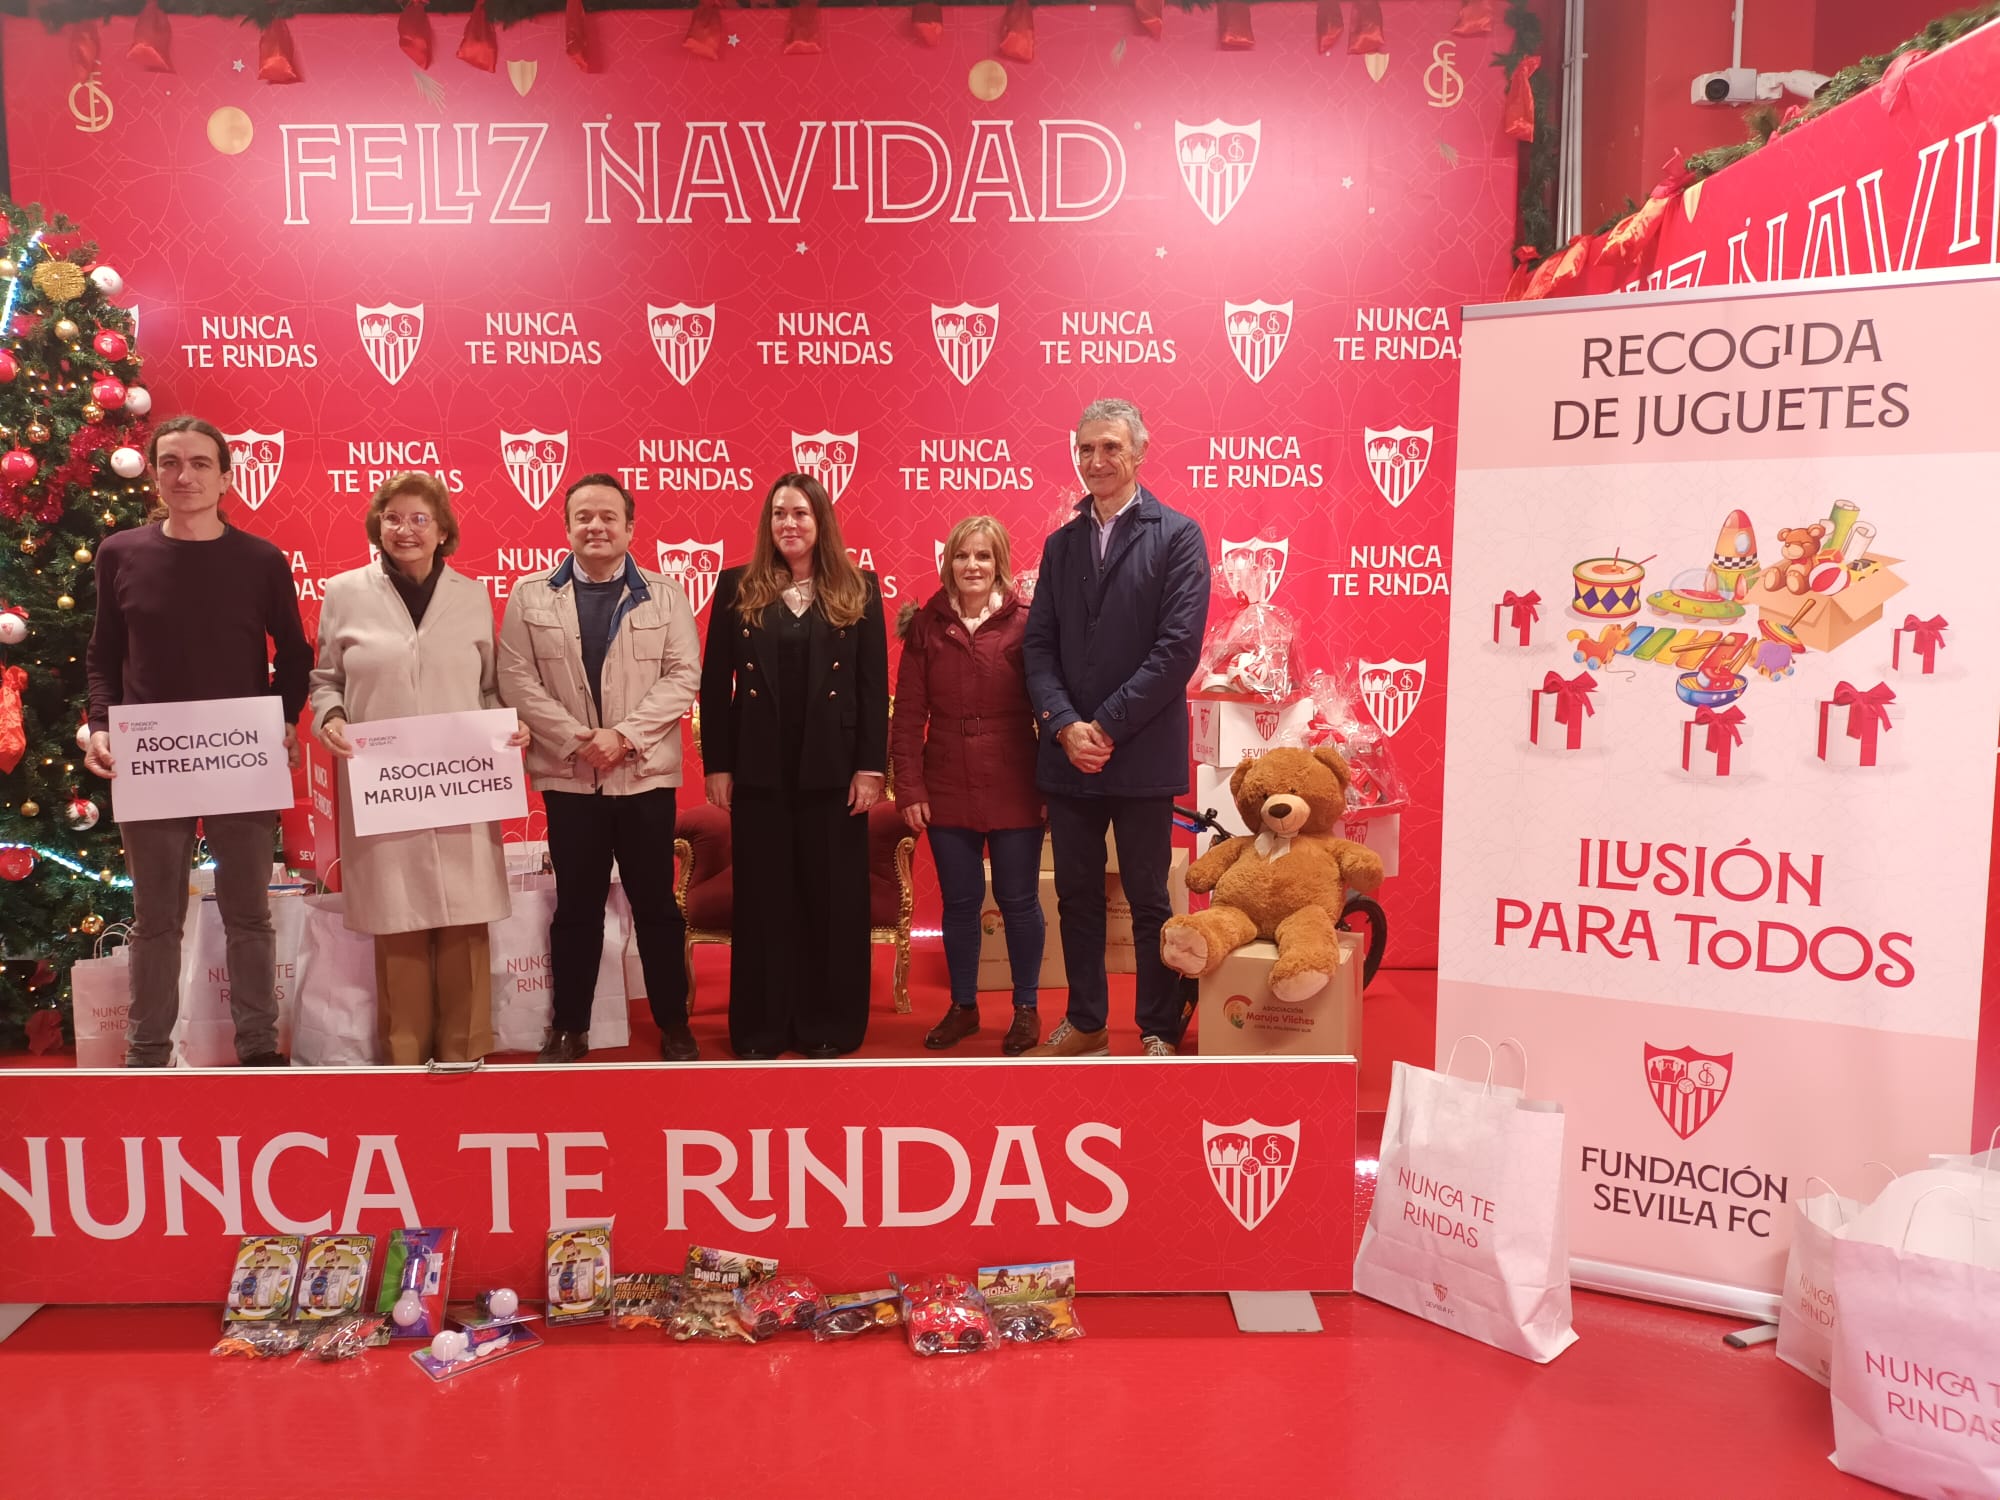 Entrega de juguetes a las entidades sociales de Sevilla